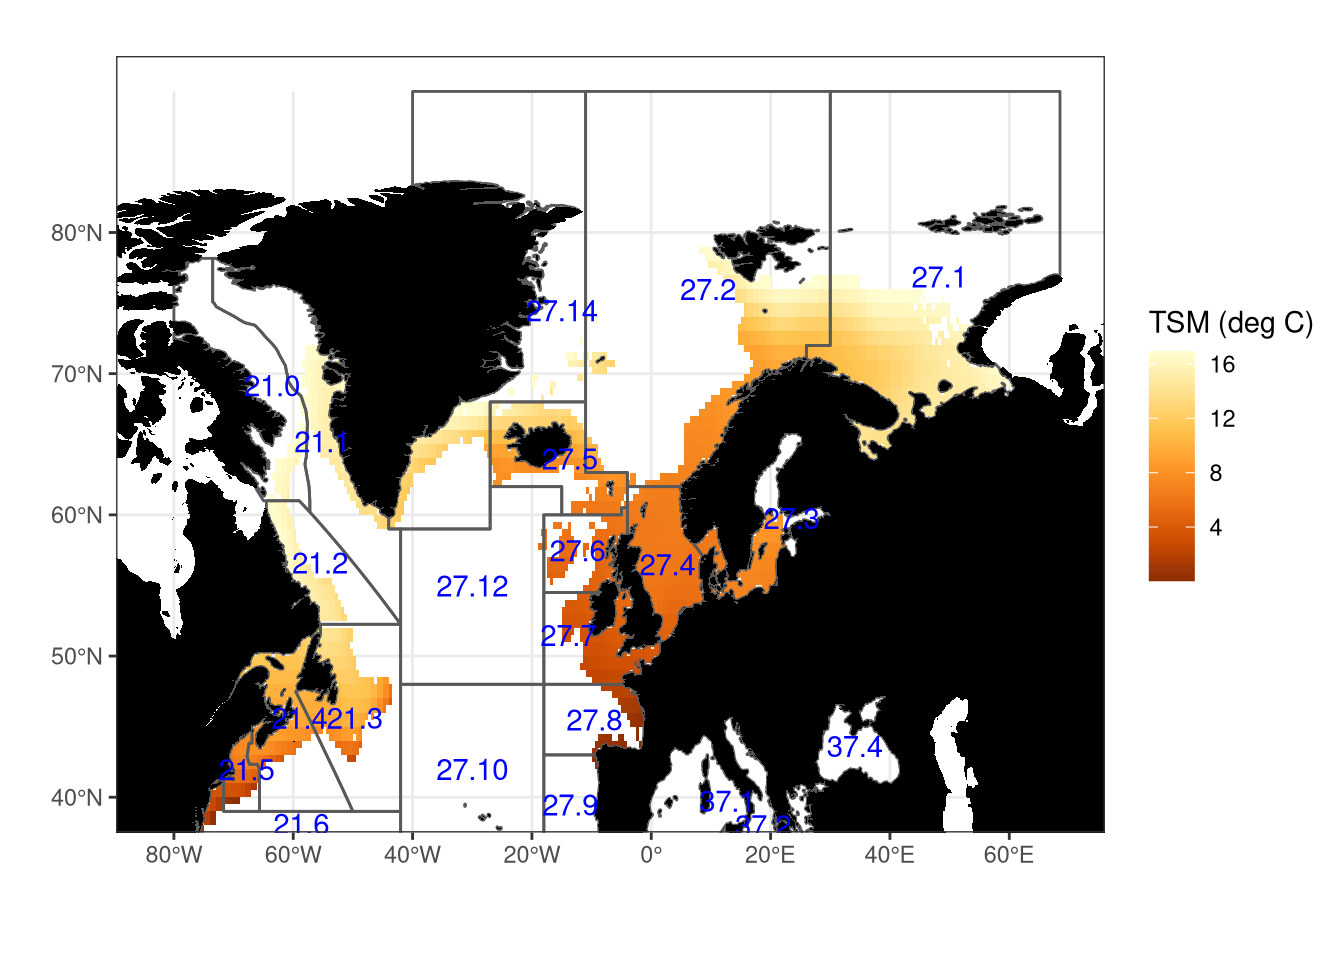 Aquamaps TSM (deg C) for Atlantic cod